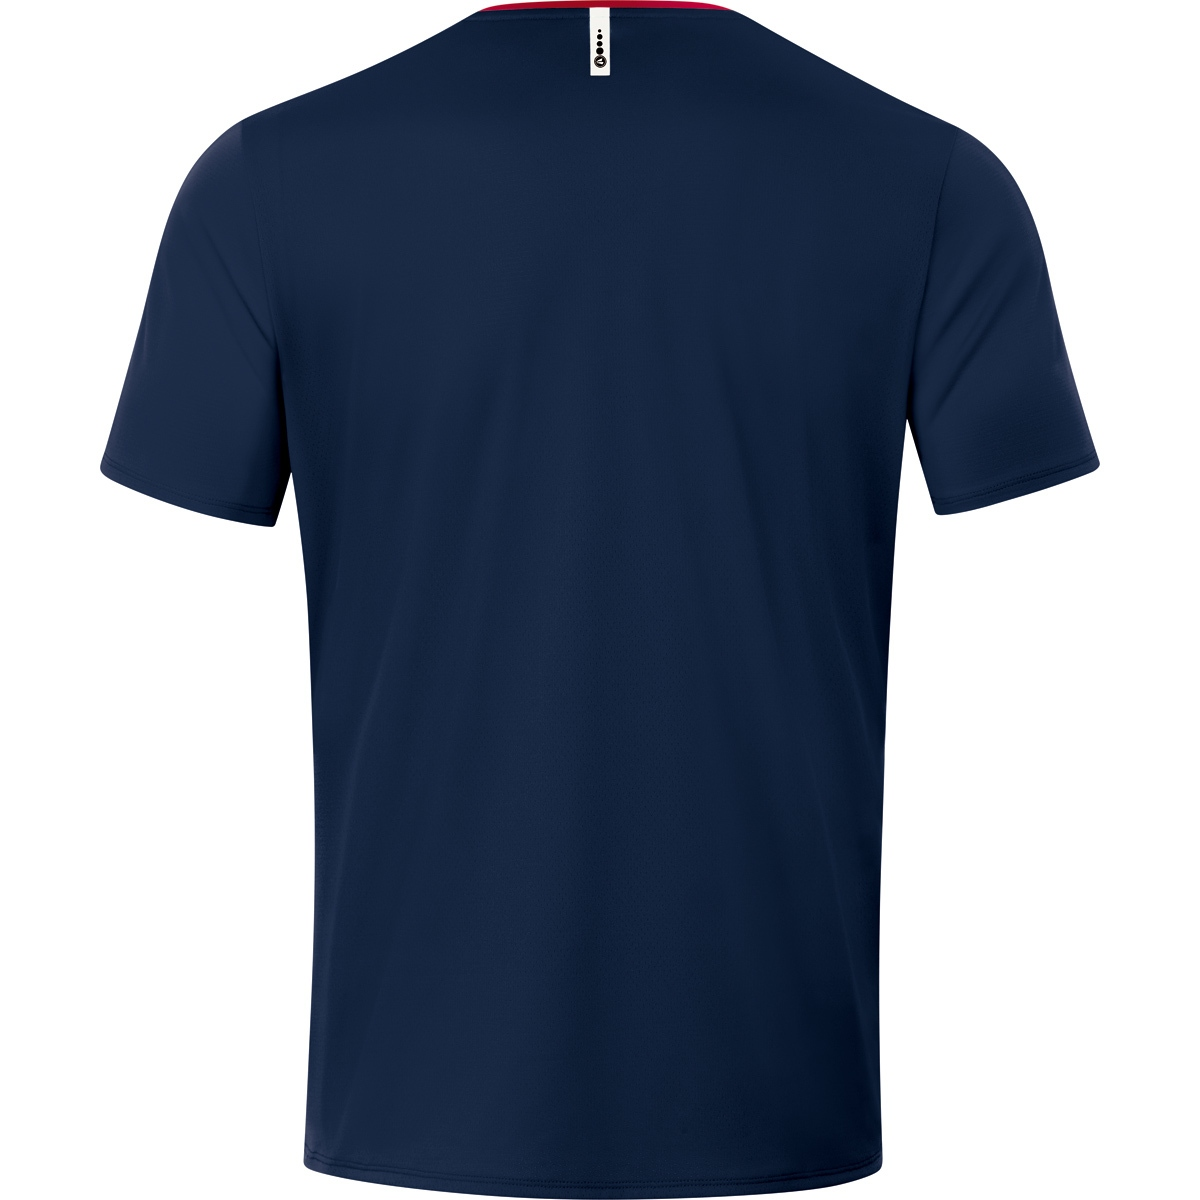 JAKO T-Shirt Kinder, 6120 Gr. rot, 2.0 128, Champ marine/chili